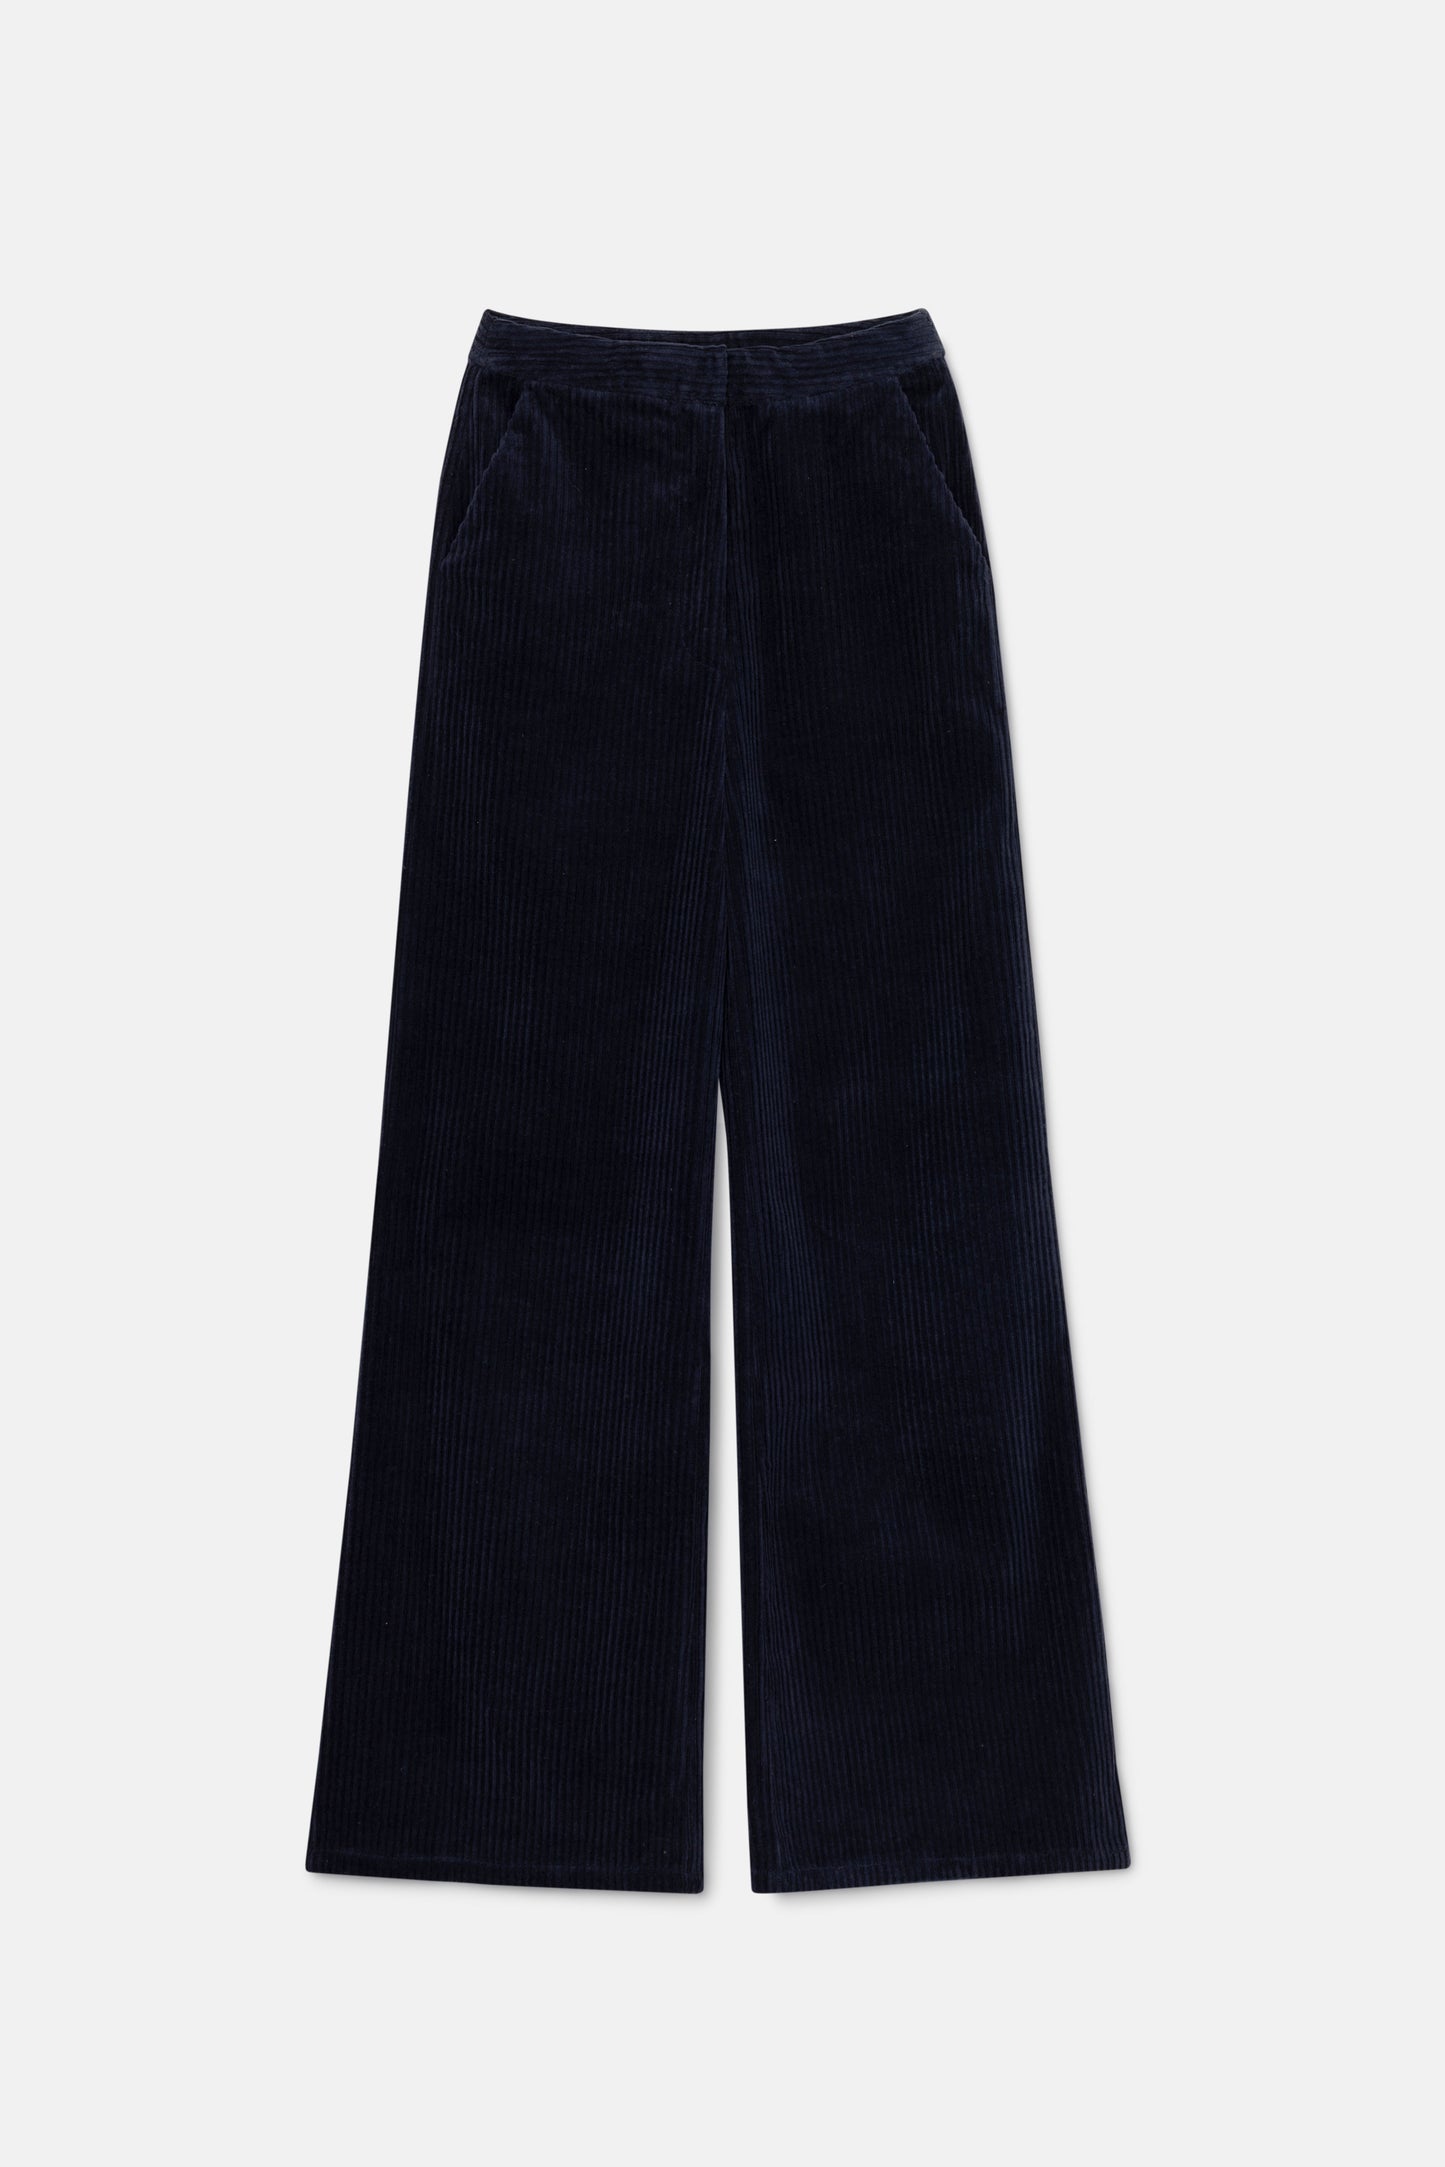 Long blue high-waist corduroy pants